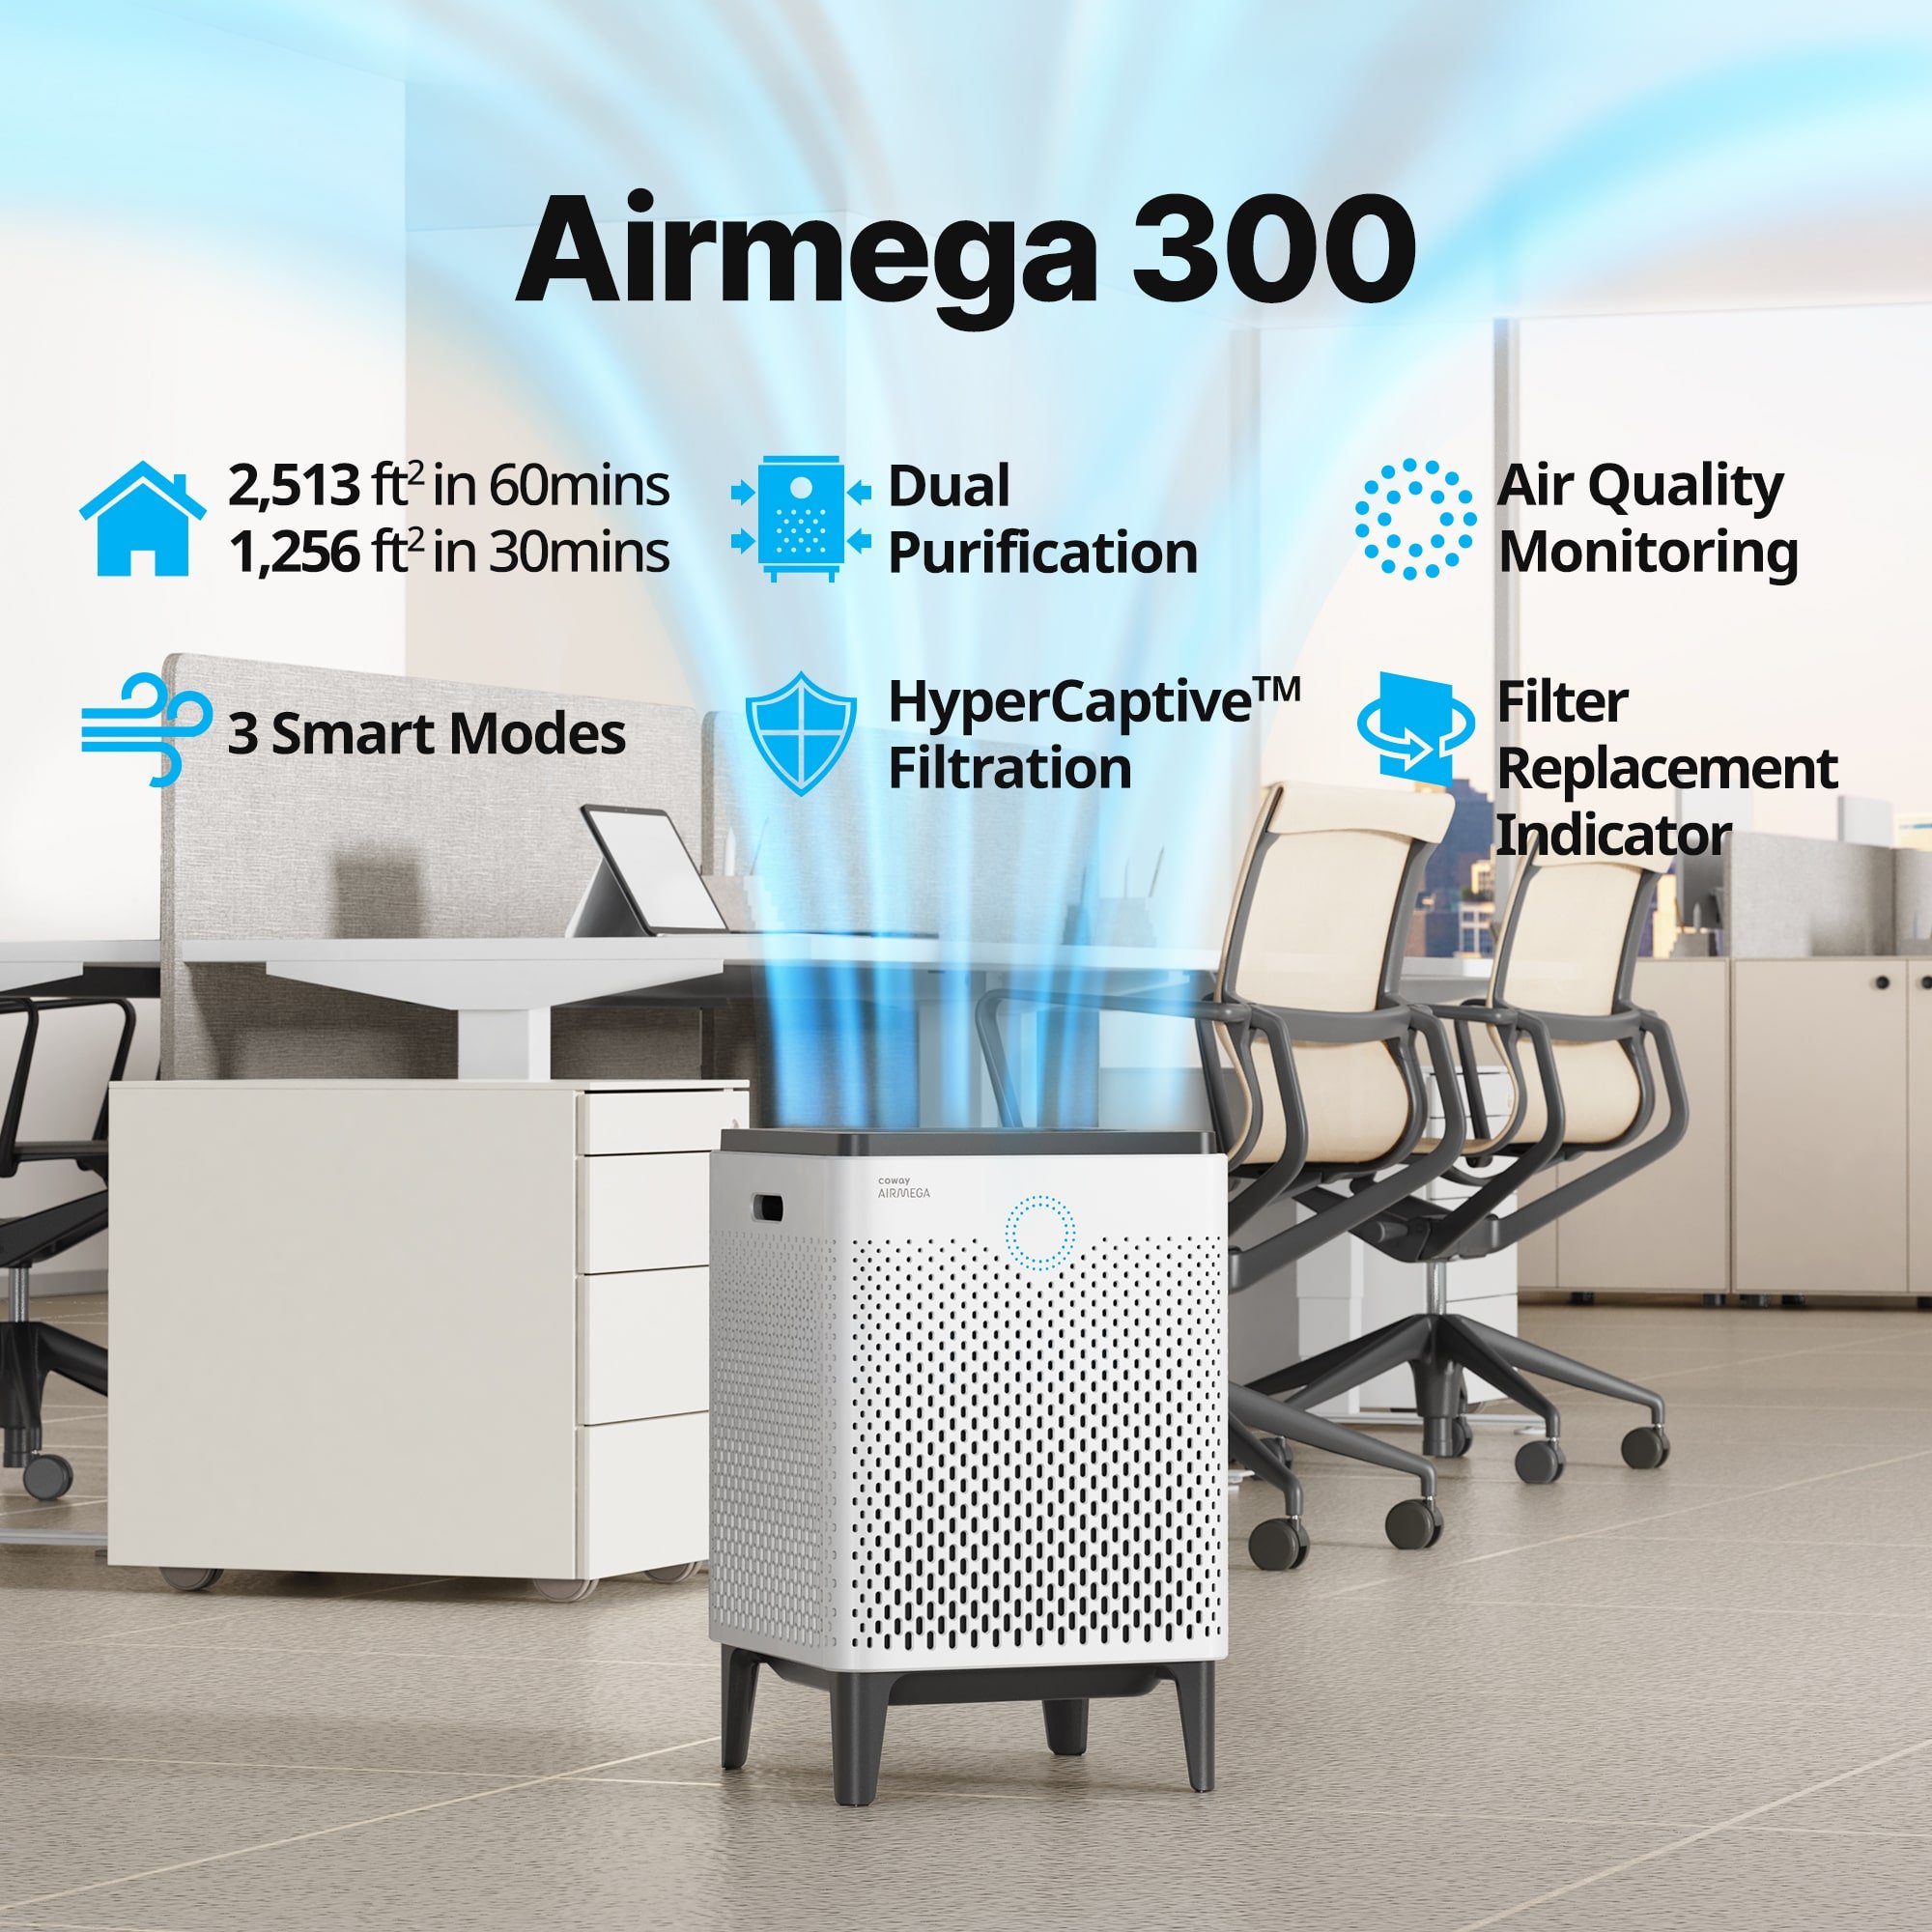 Airmega 300 highlight features